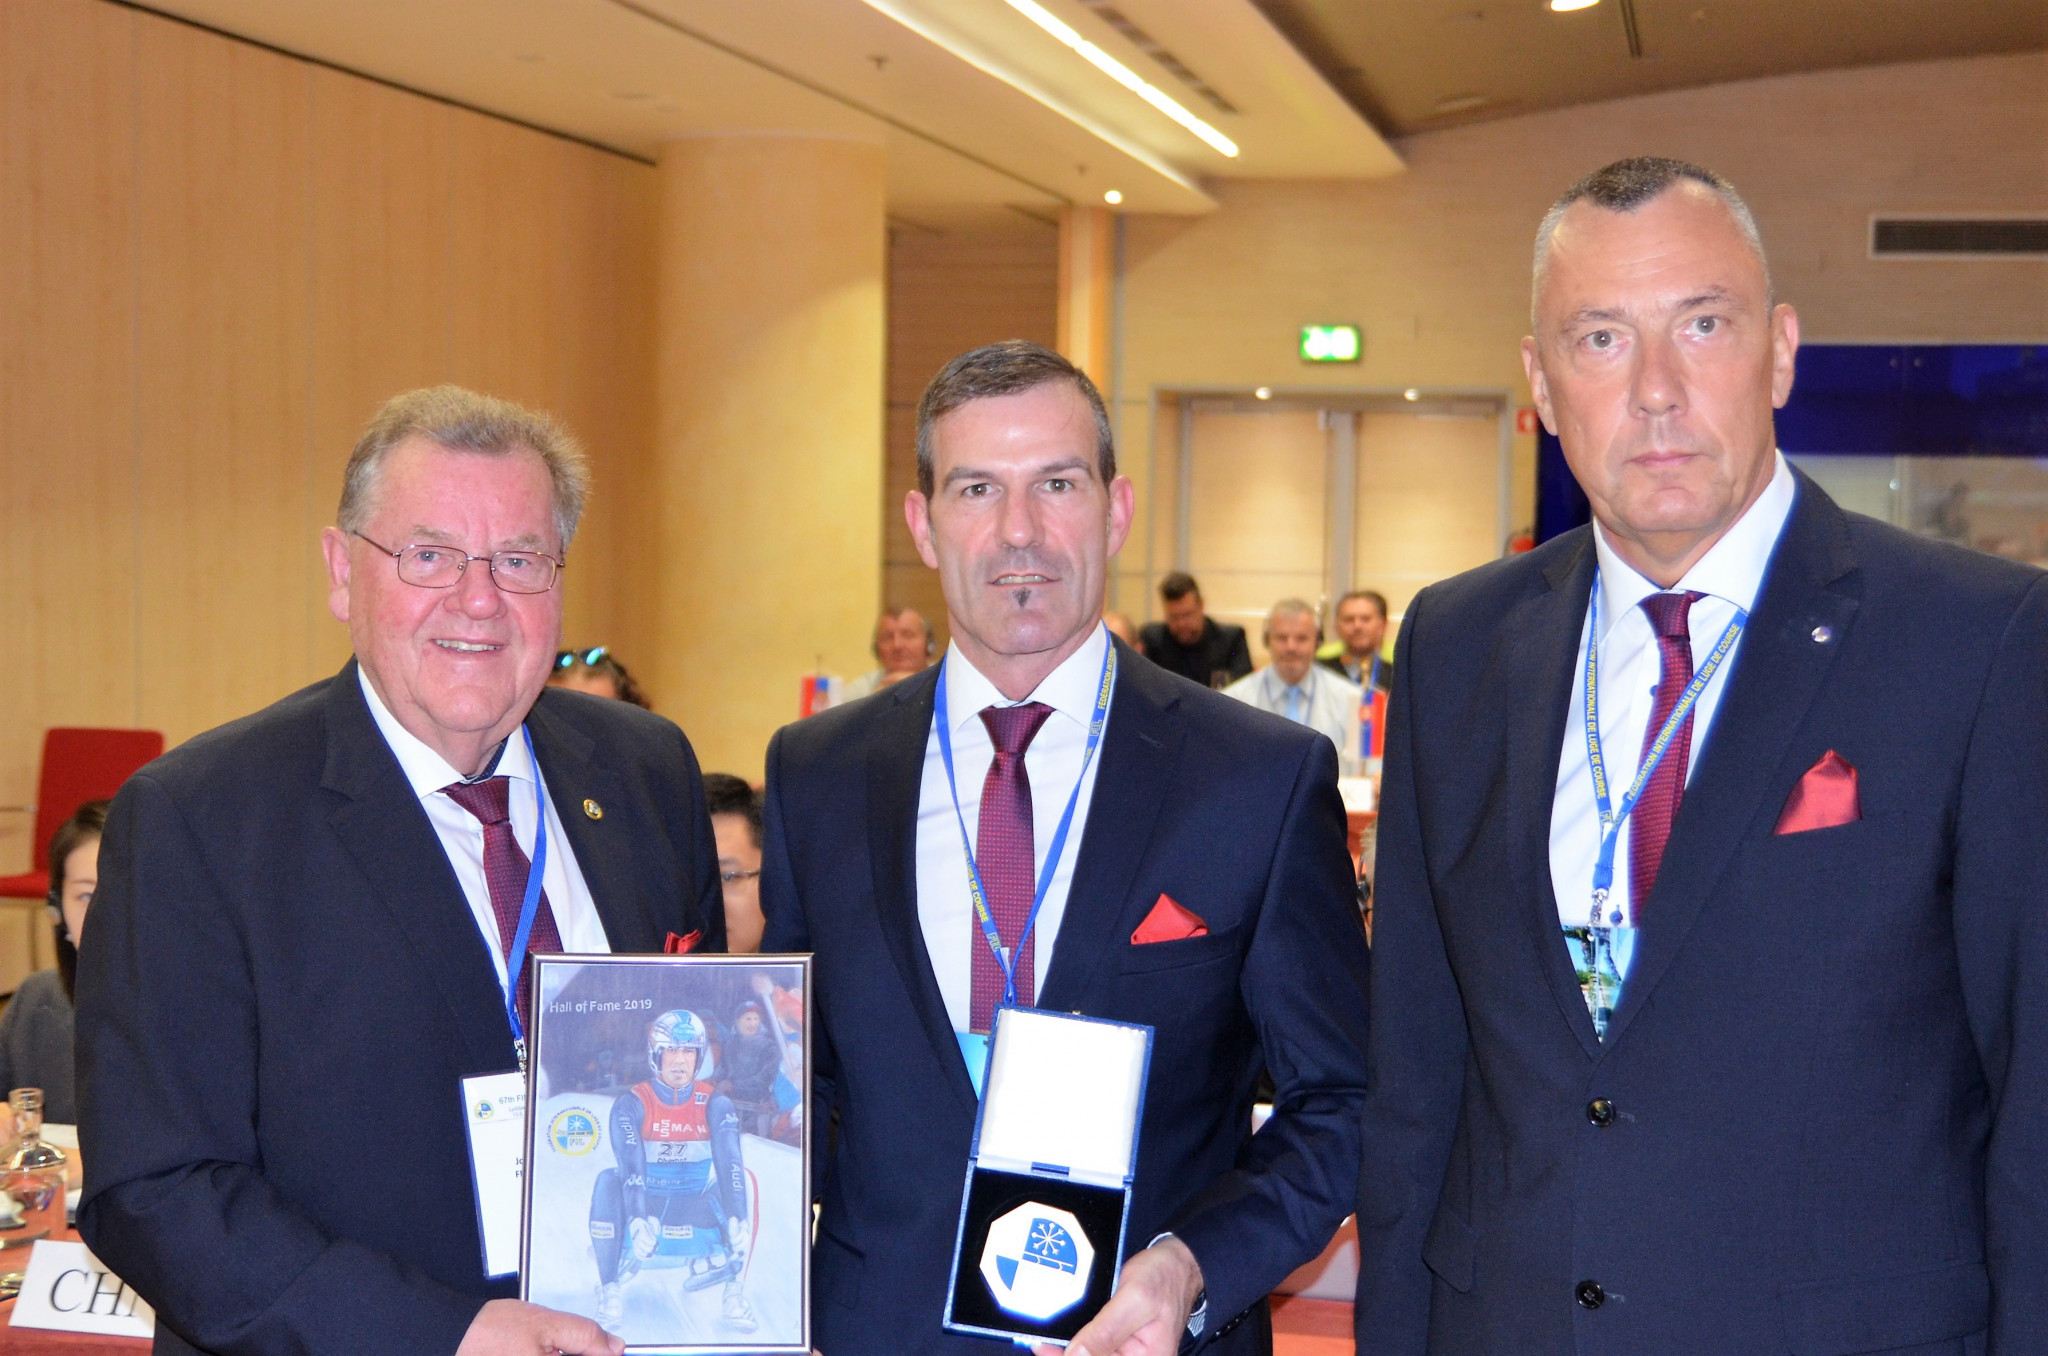 Luge legend Zöggeler inducted into Hall of Fame as FIL Congress begins